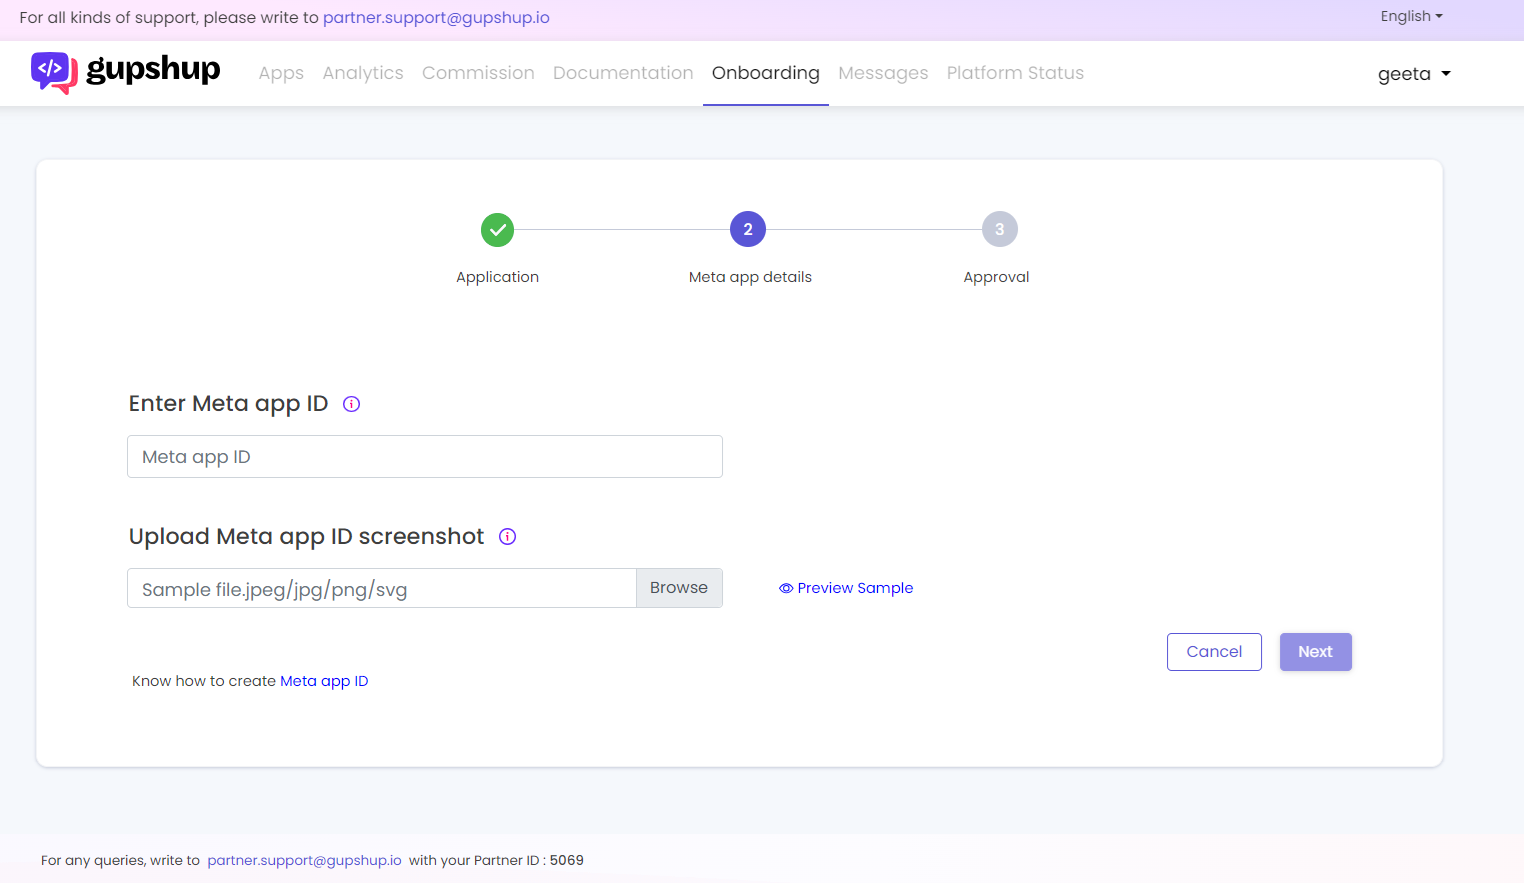 Screen to upload Meta App ID screenshot during the partner creation process